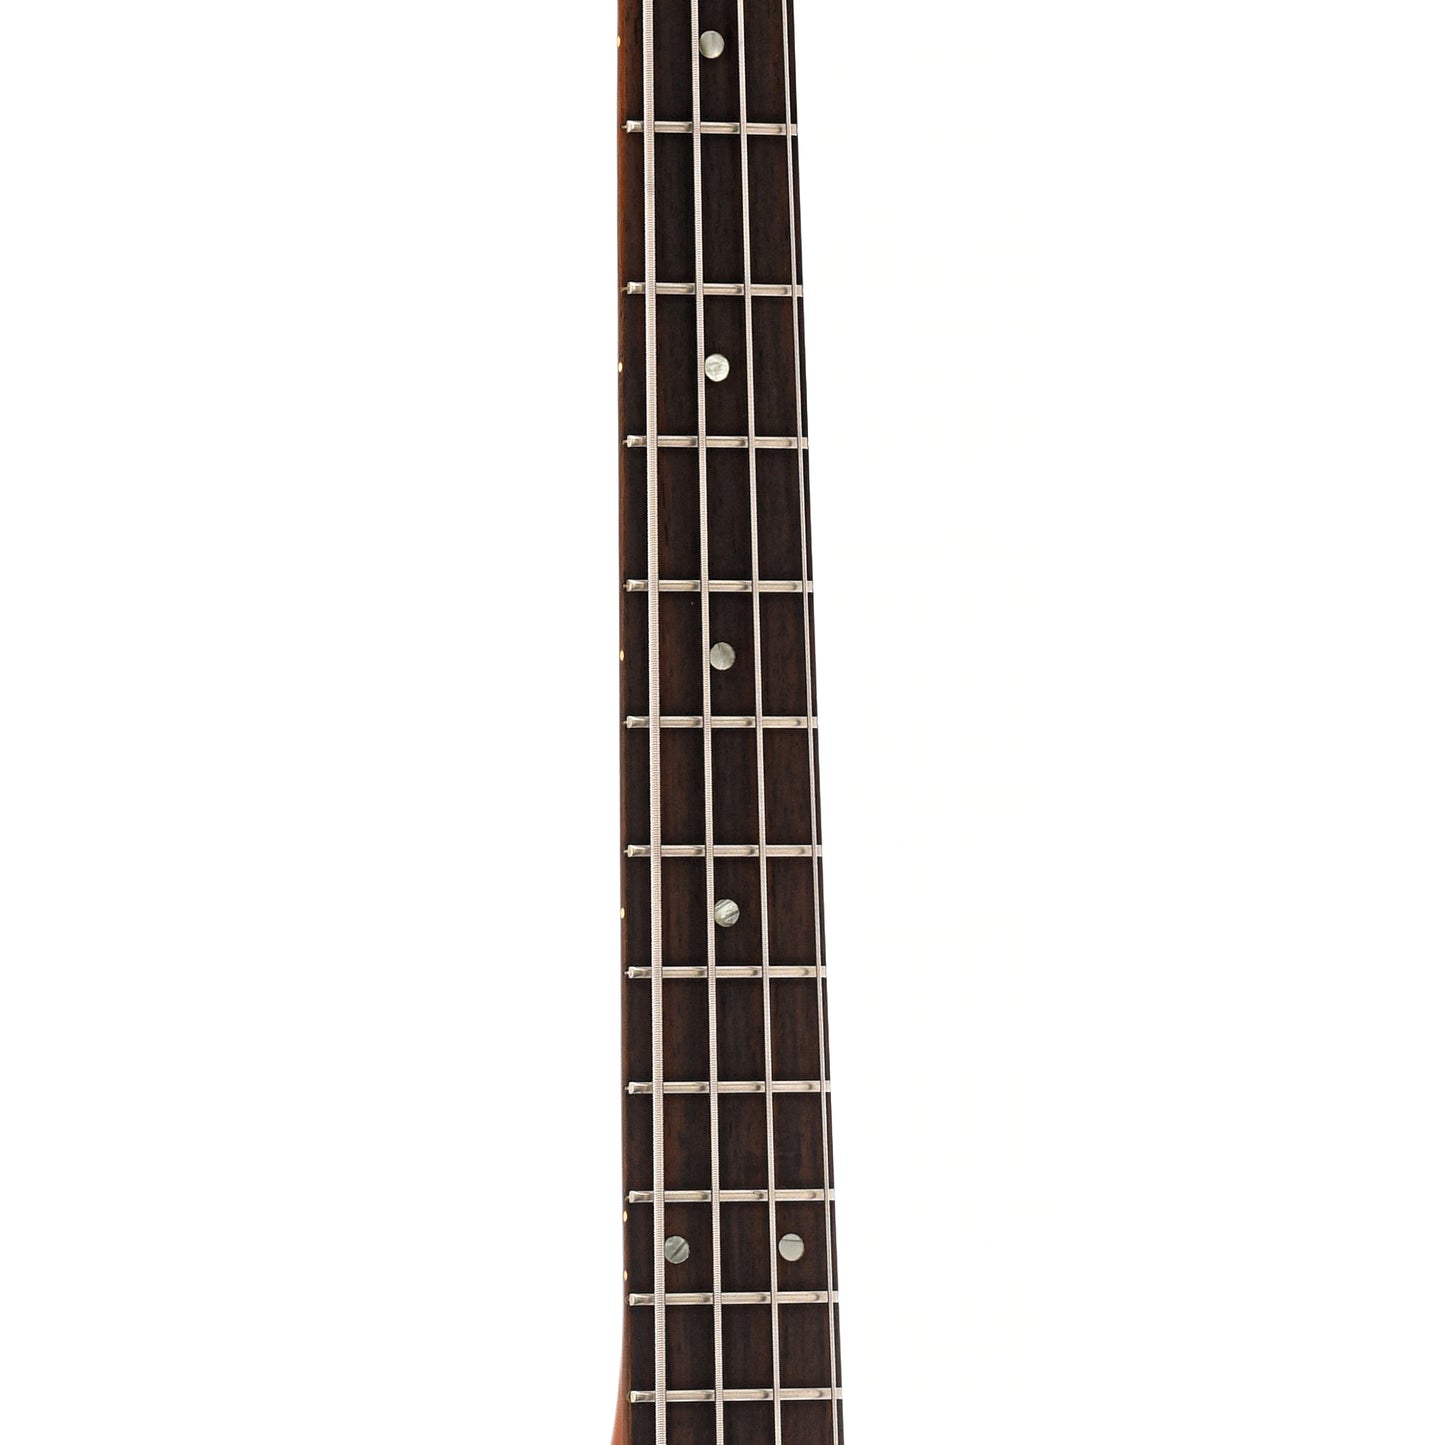 Fretboard of Gibson Melody Maker Bass